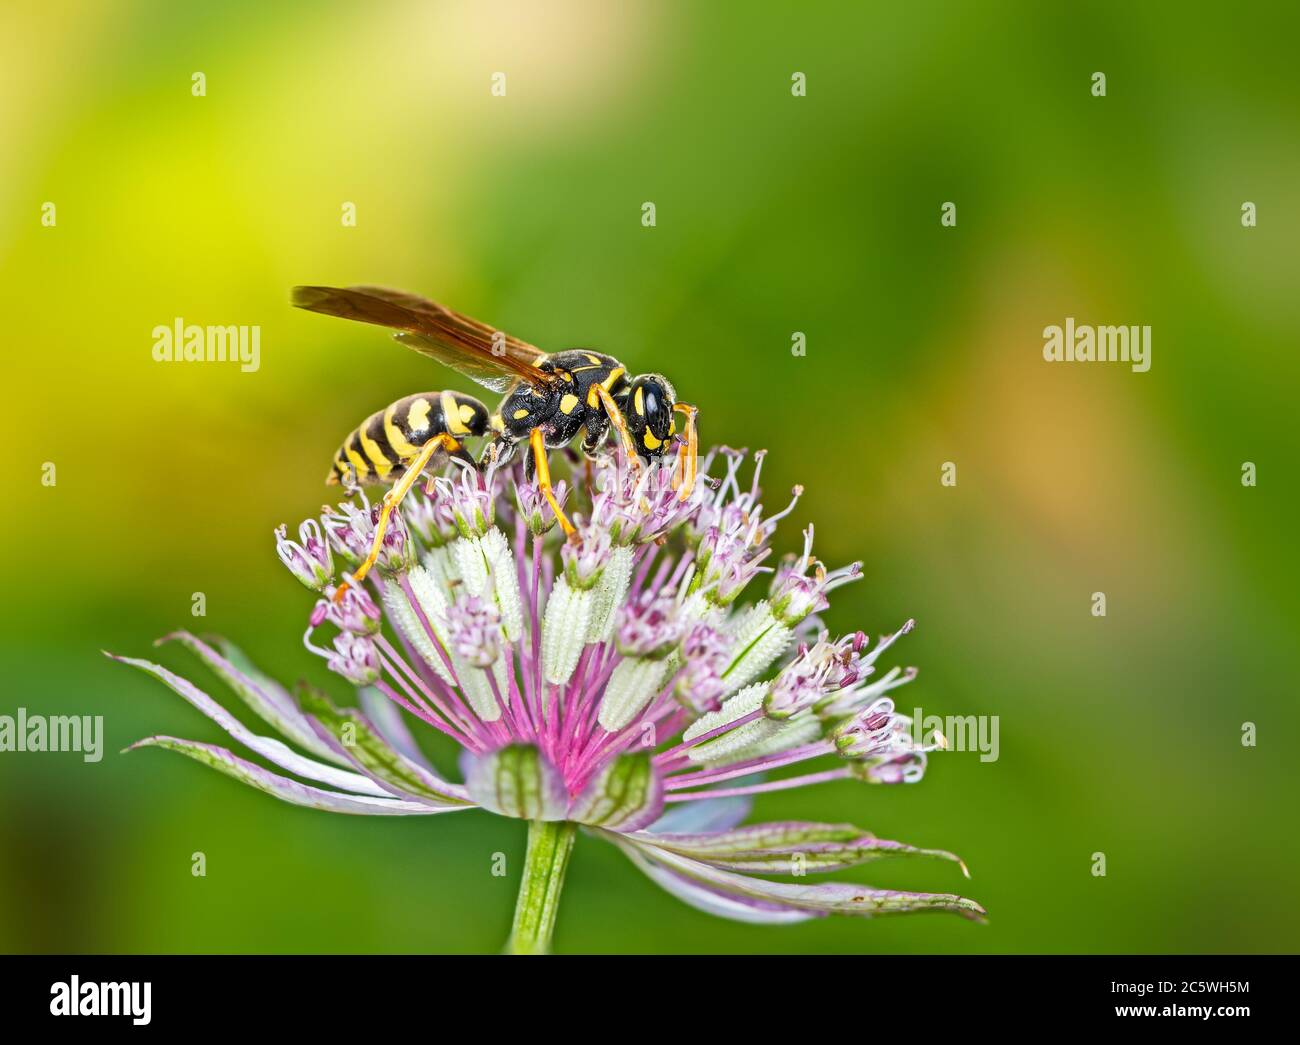 European paper wasp (Polistes dominula) on an astranatia flower blossom Stock Photo